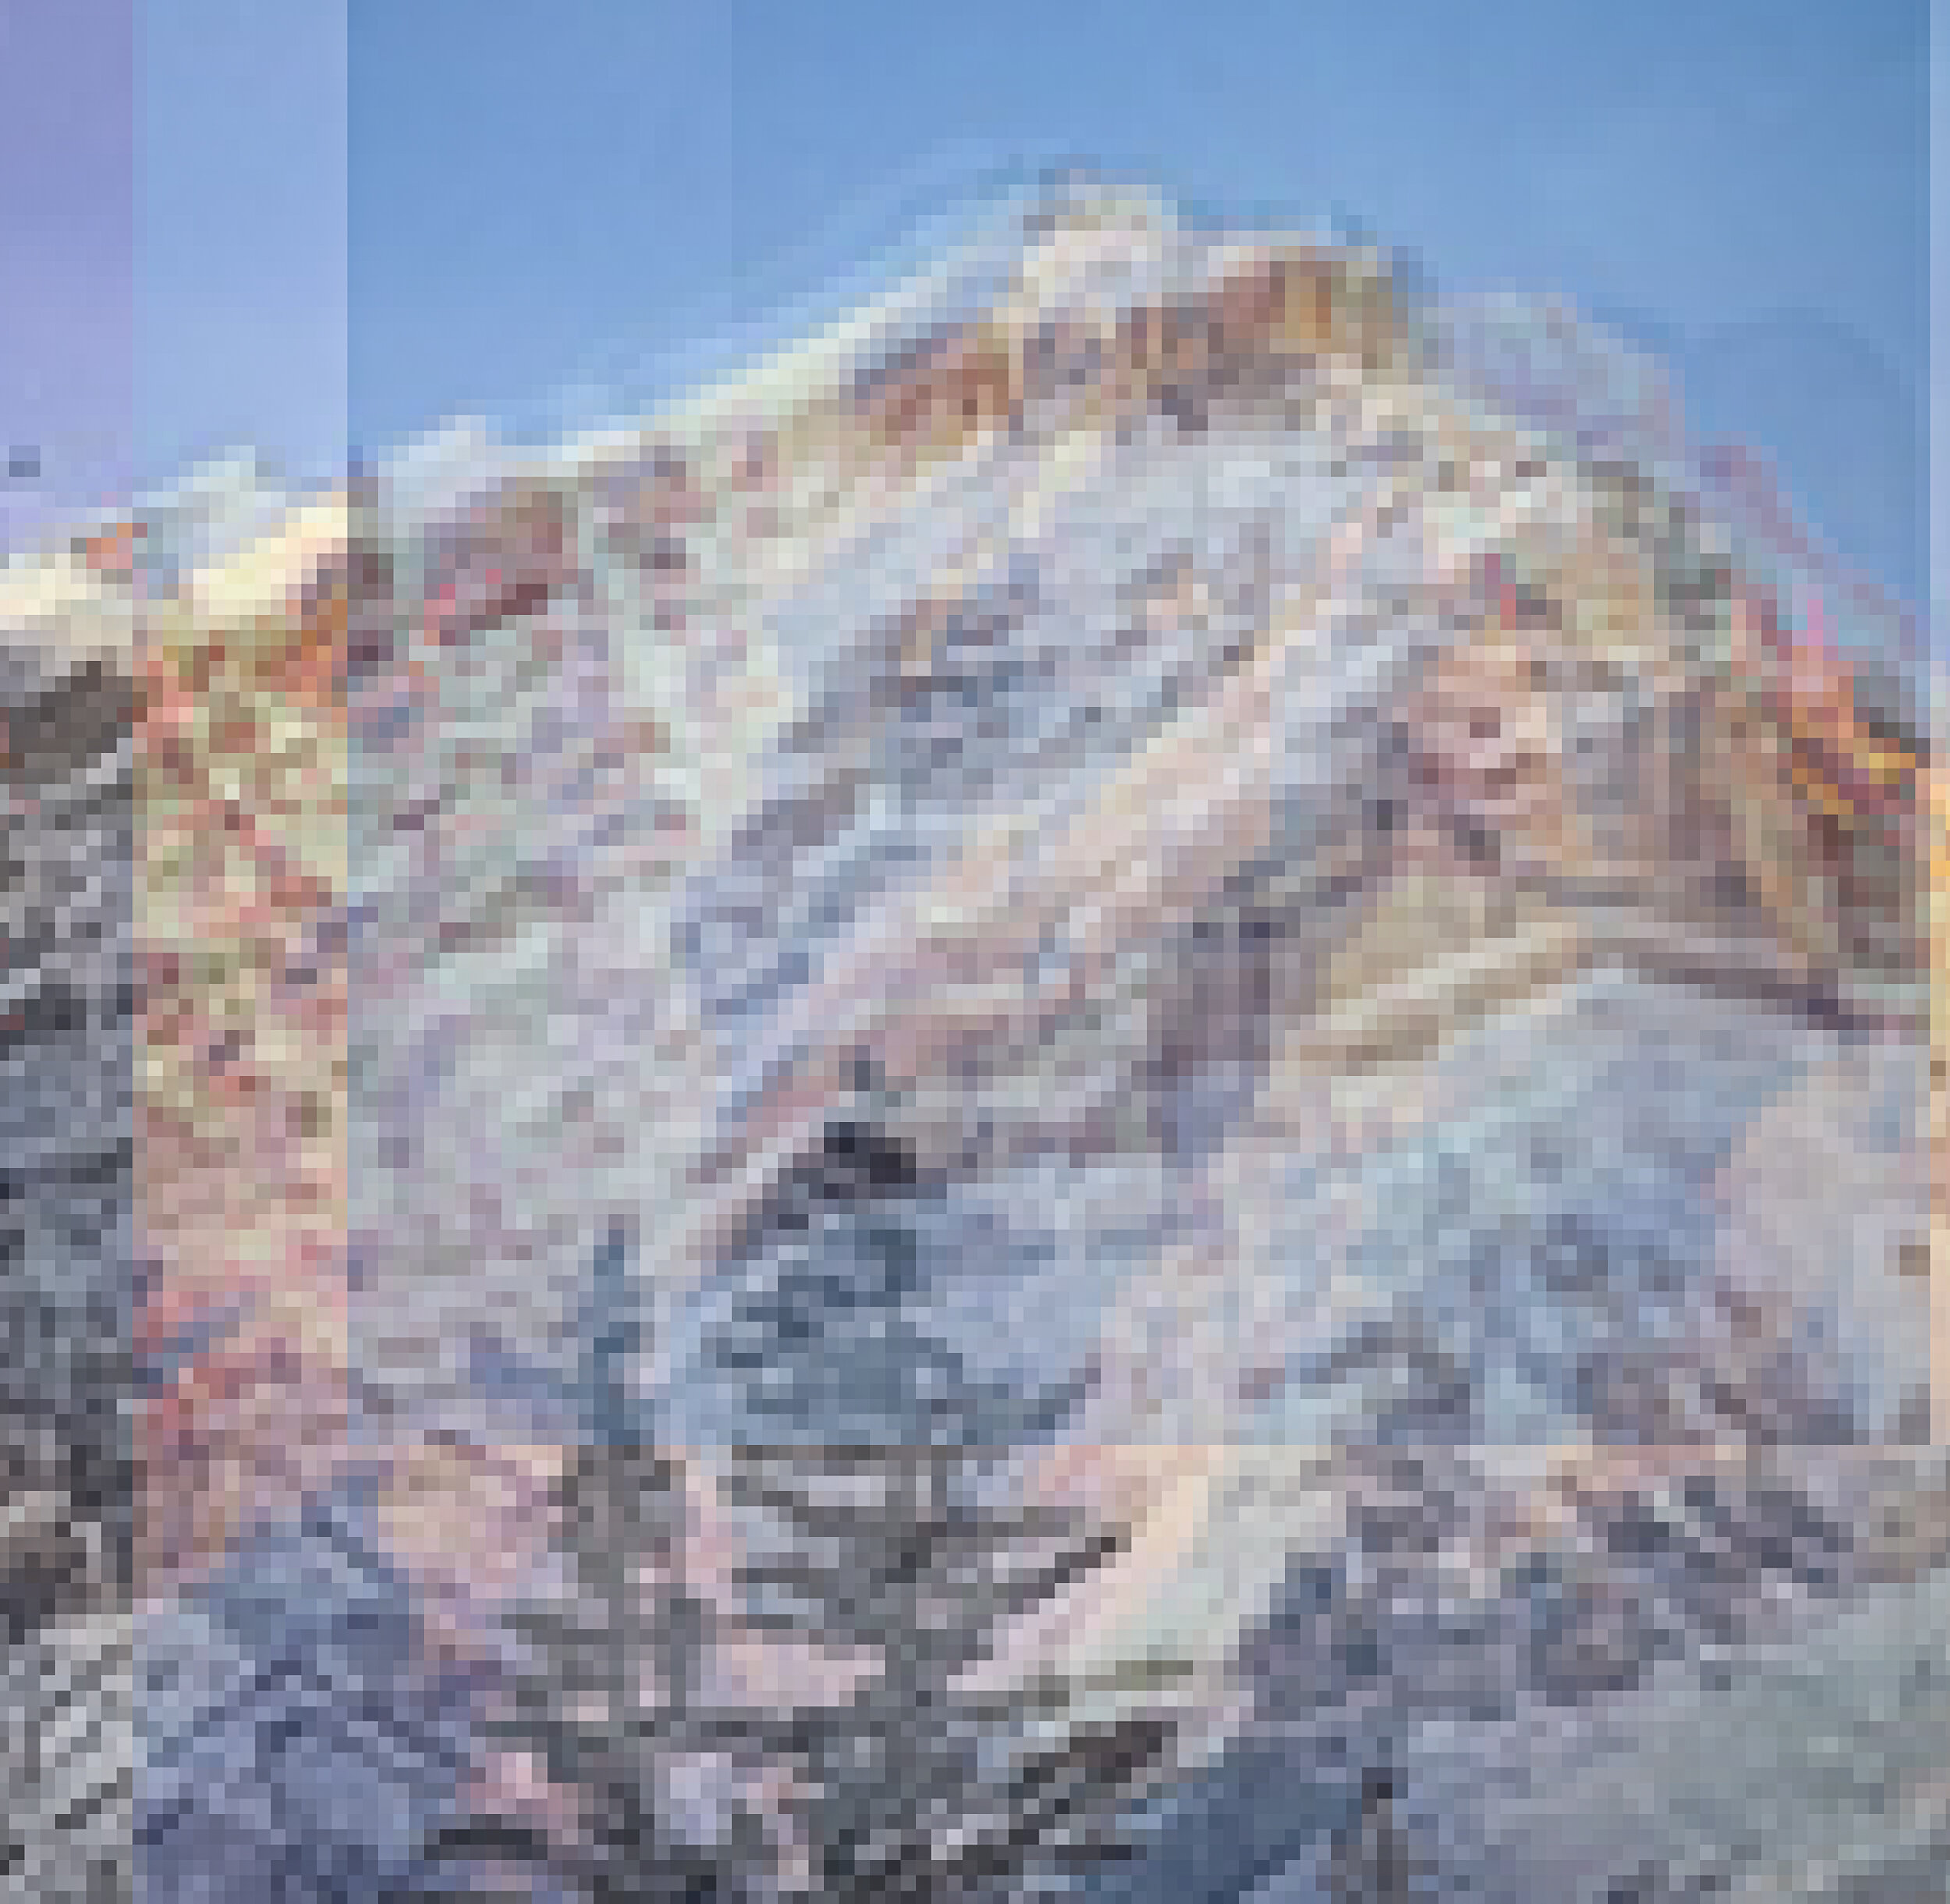 Detail View - Cascade Mountain, Banff, Alberta, Canada, for @alliesgallery